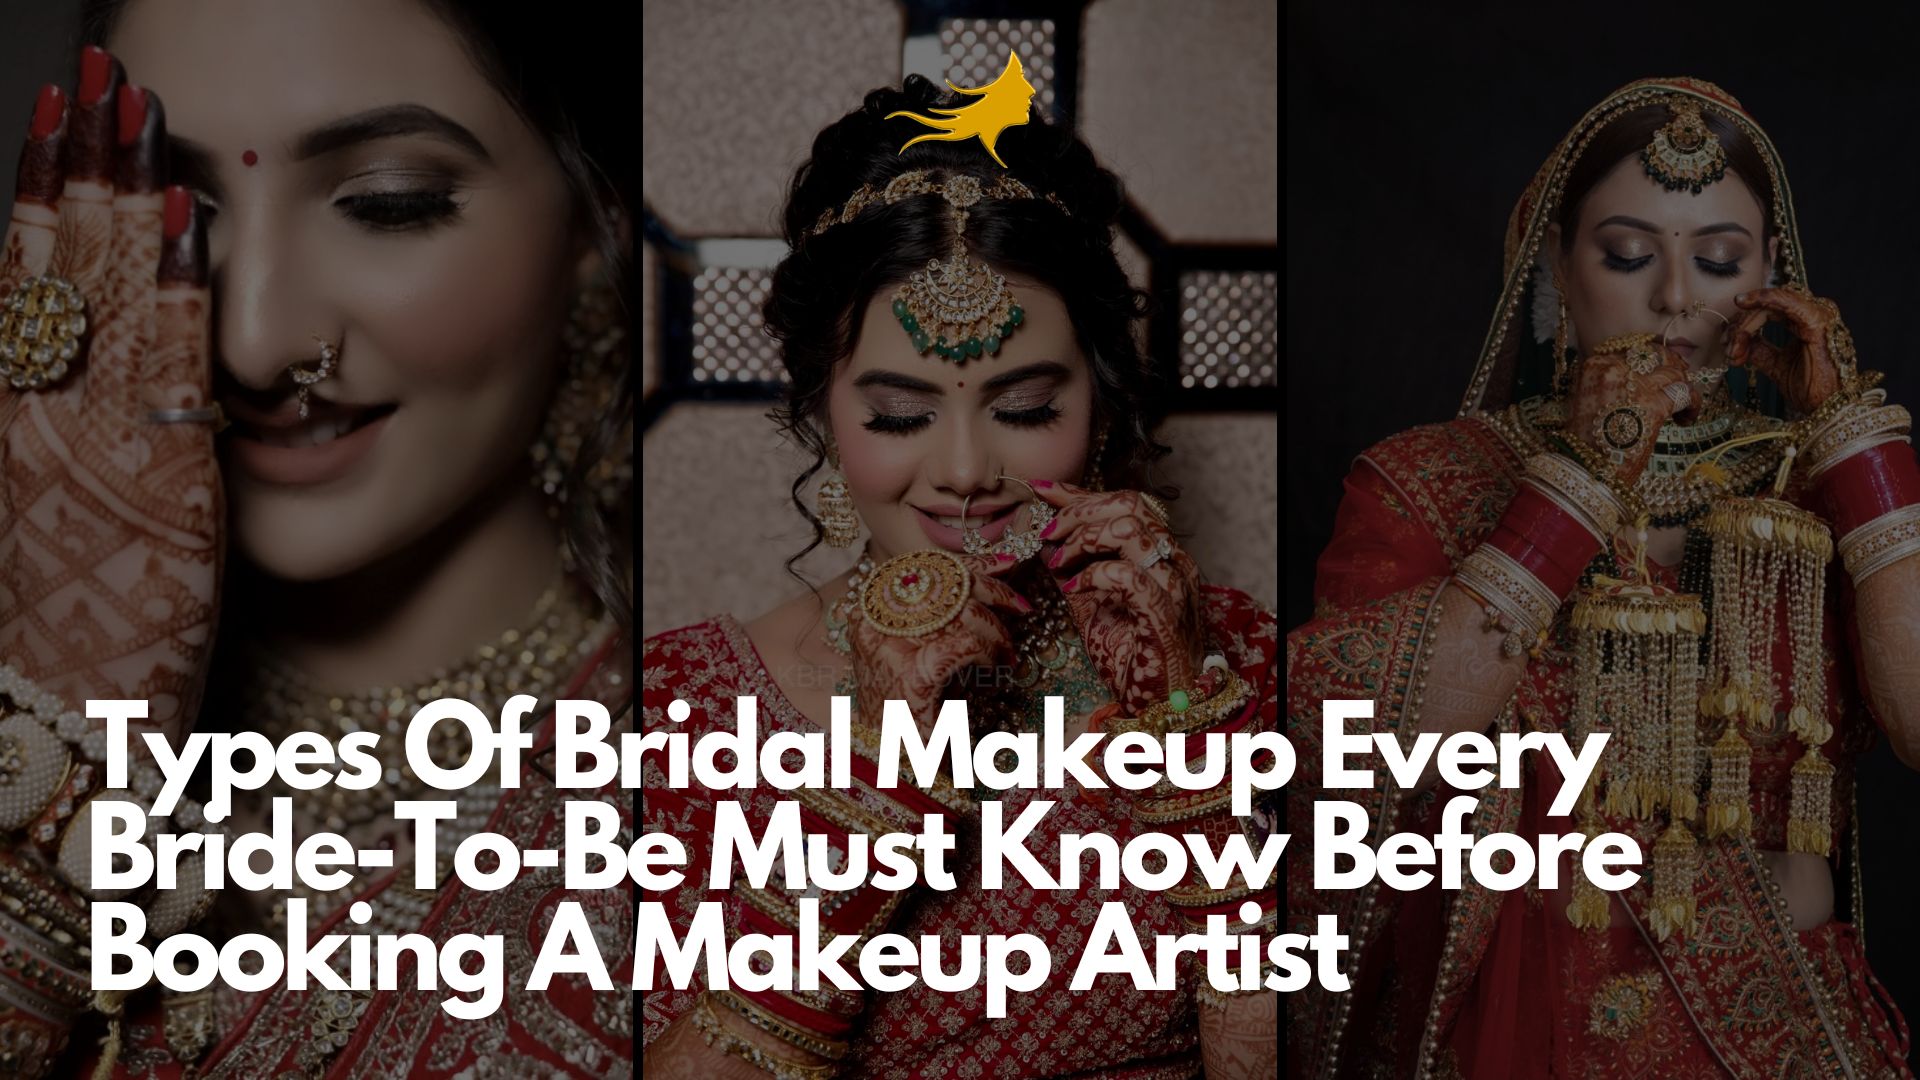 Bridal makeup artist salary in India (1)